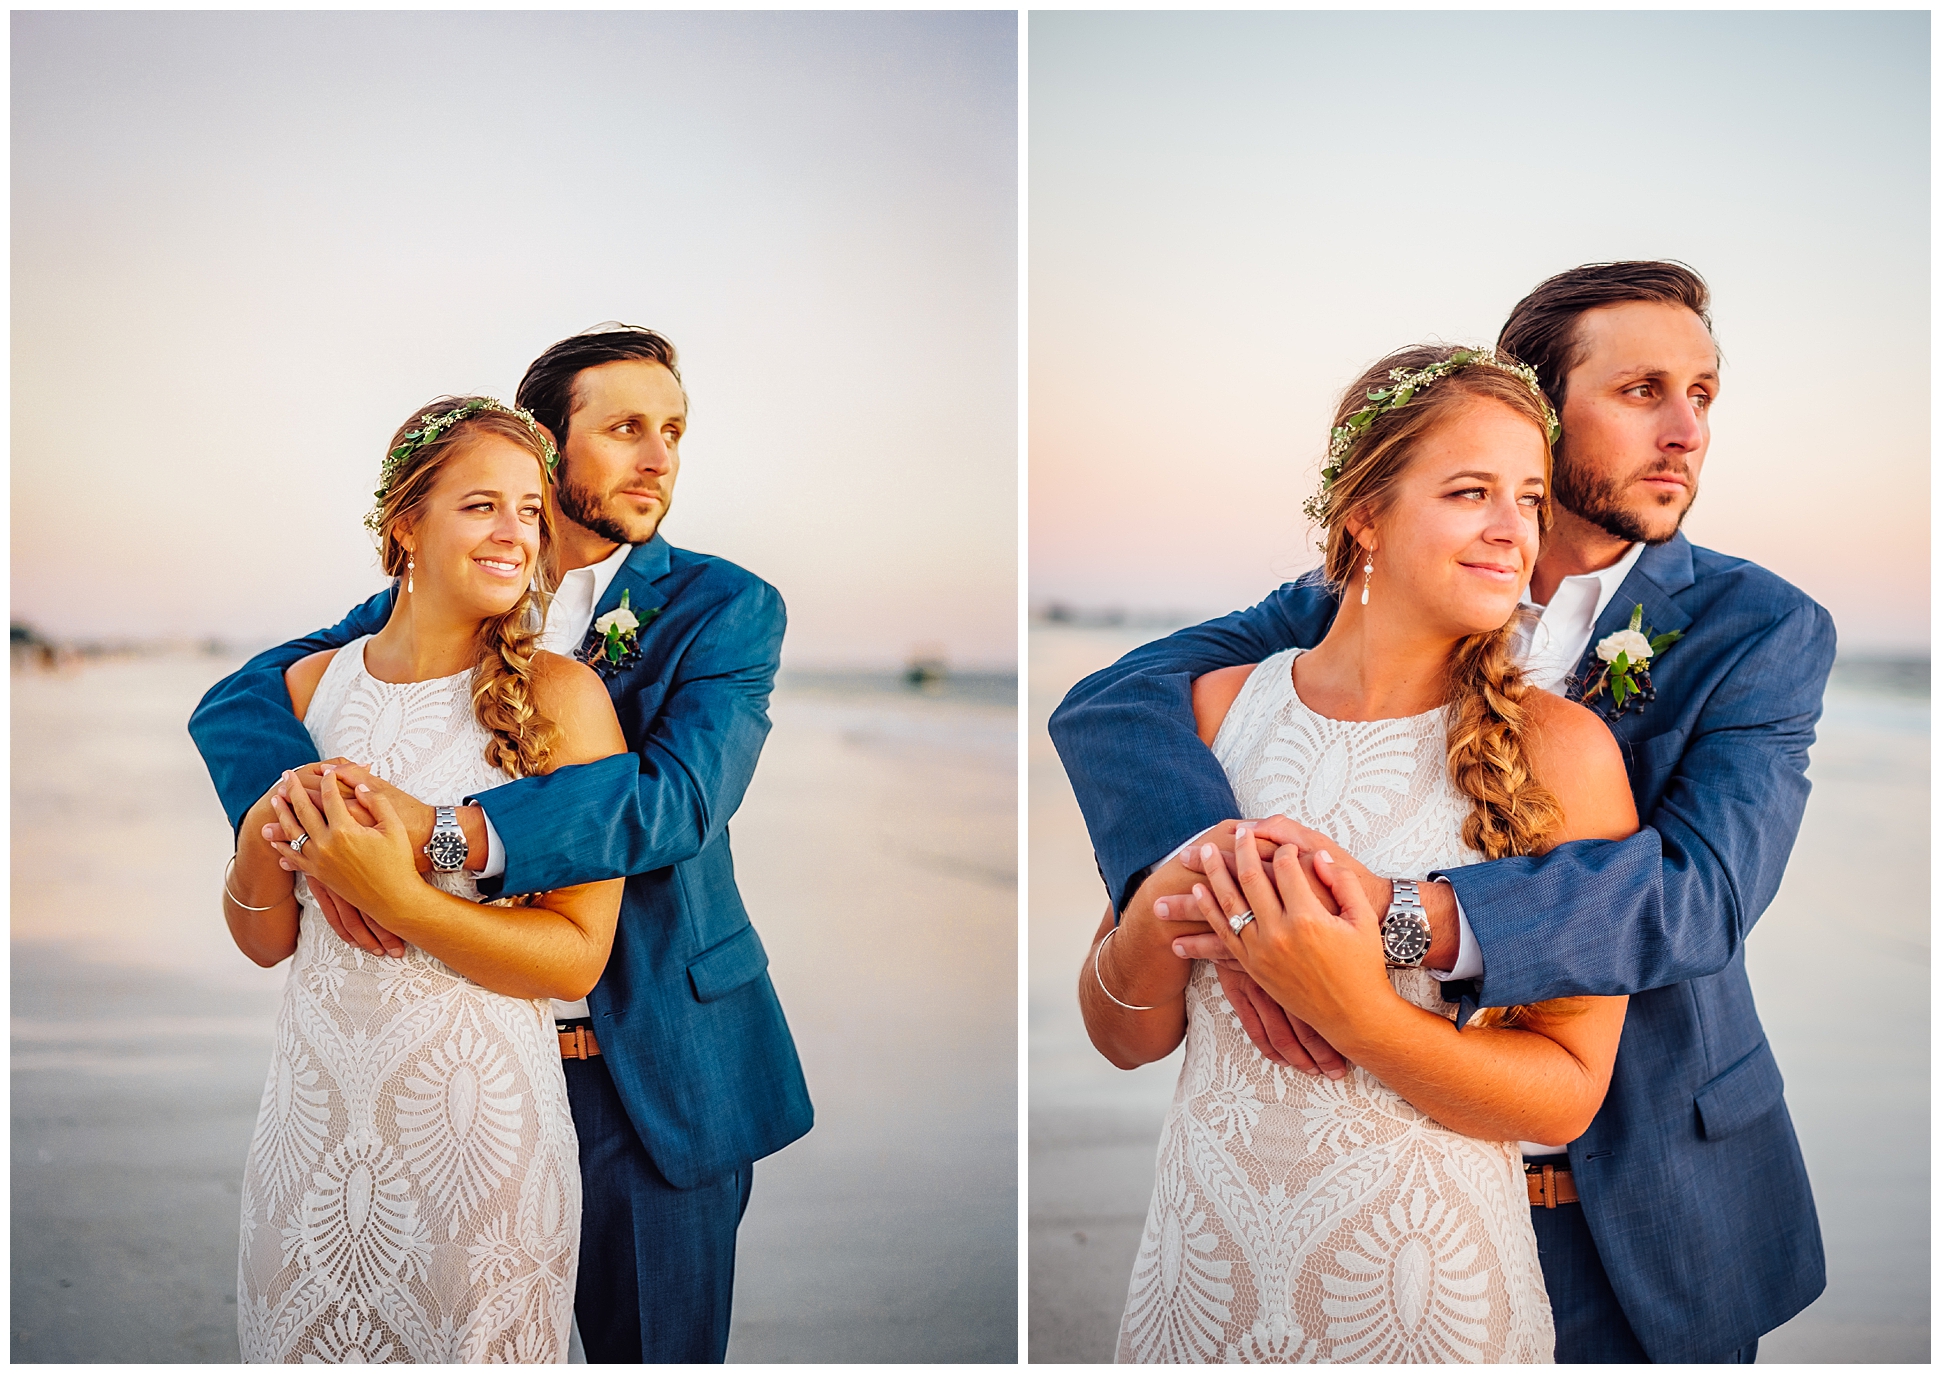 medium-format-film-vs-digital-wedding-photography-florida-beach_0025.jpg